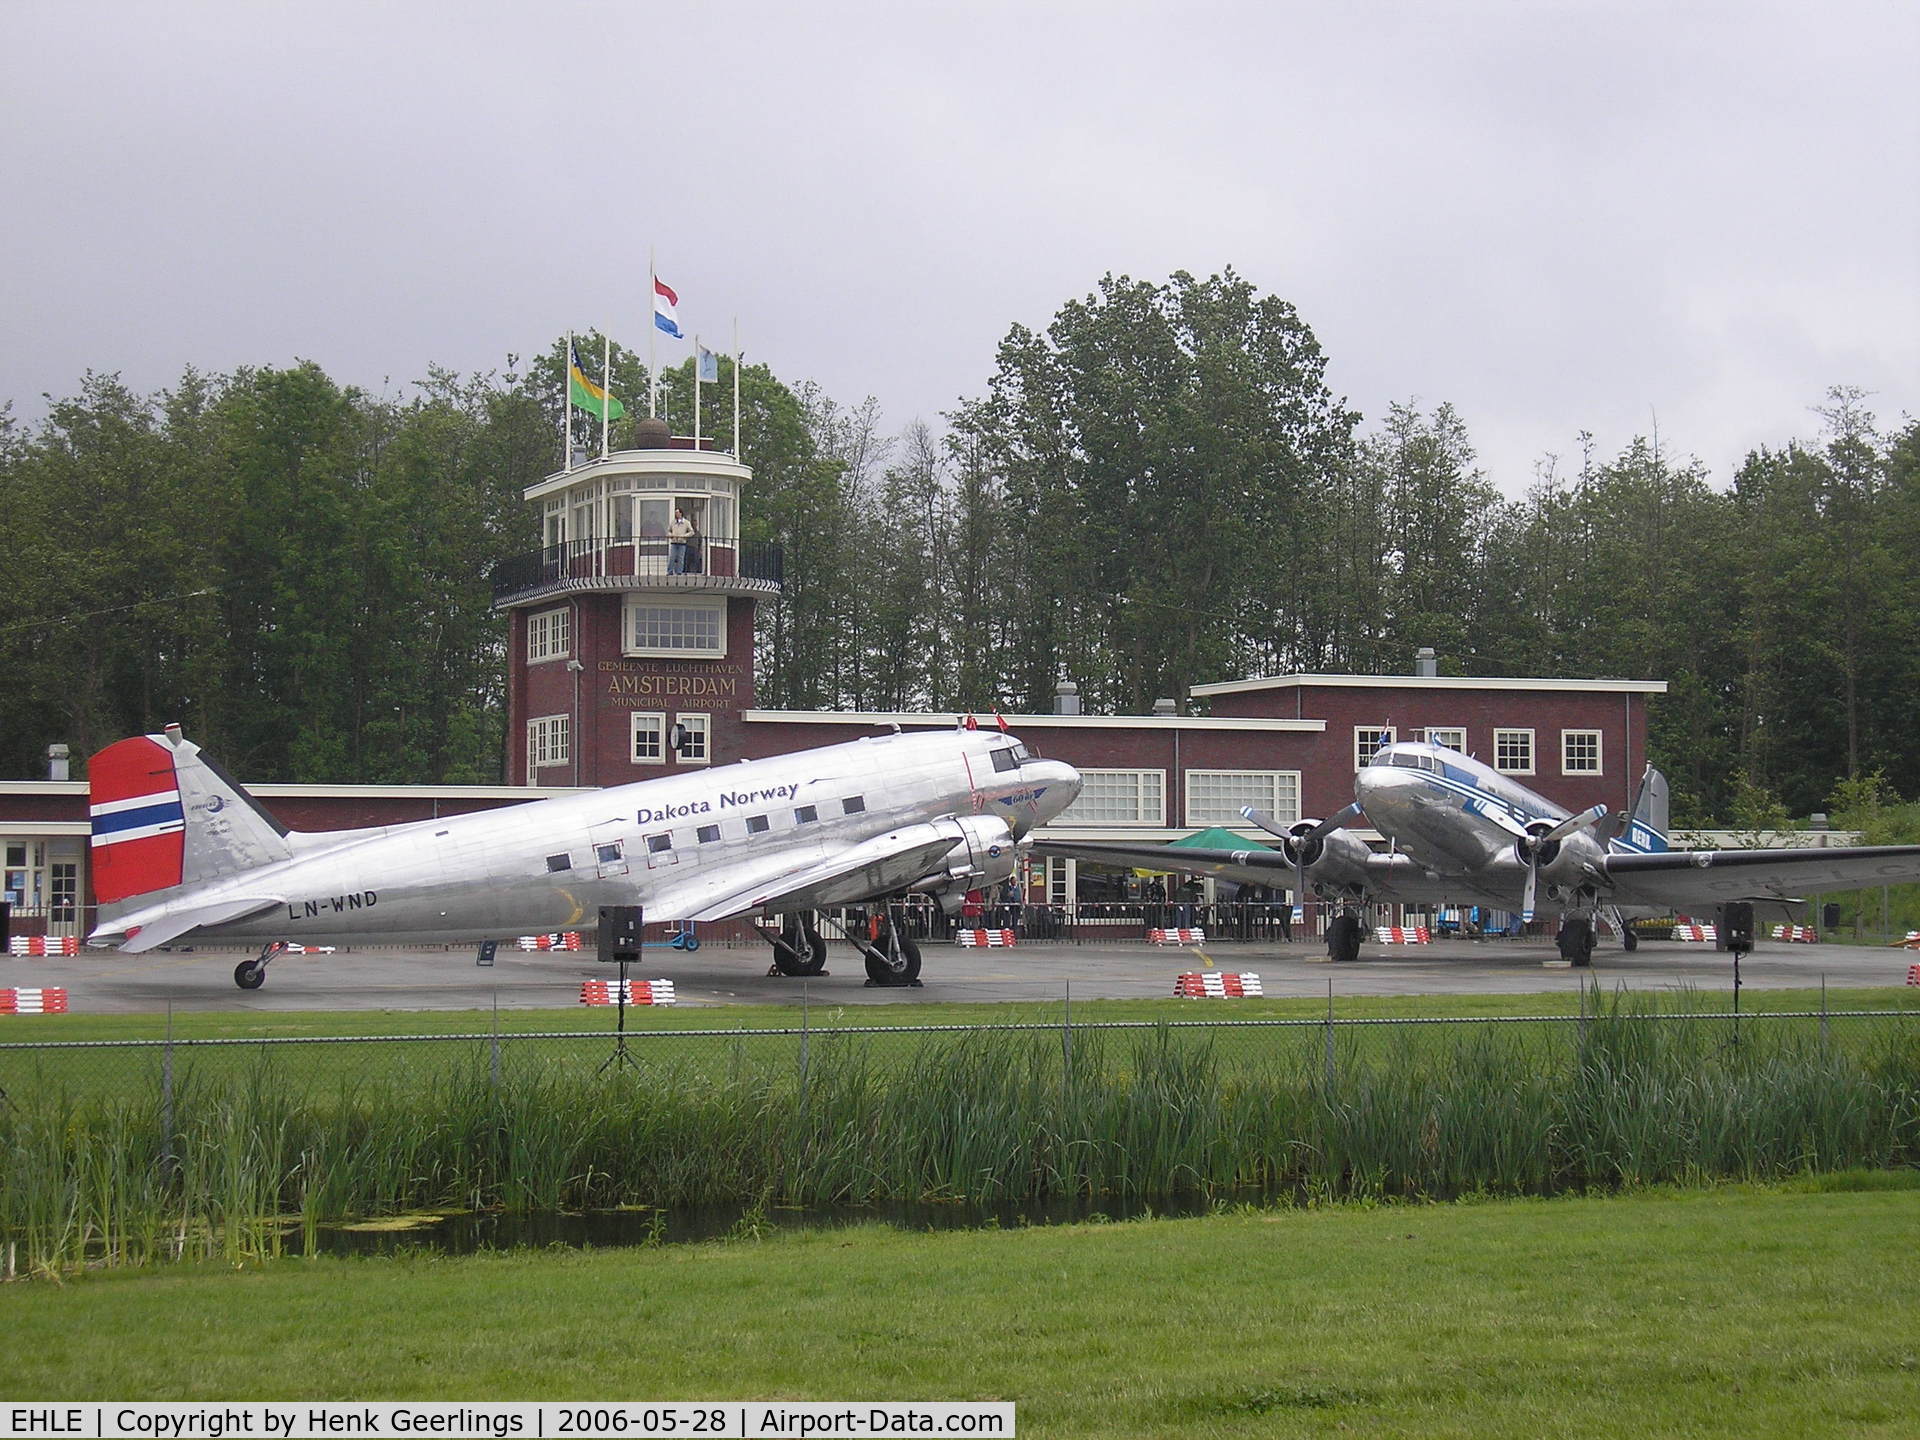 Lelystad Airport, Lelystad Netherlands (EHLE) - Aviodrome - Aviation Museum - Lelystad, own platform